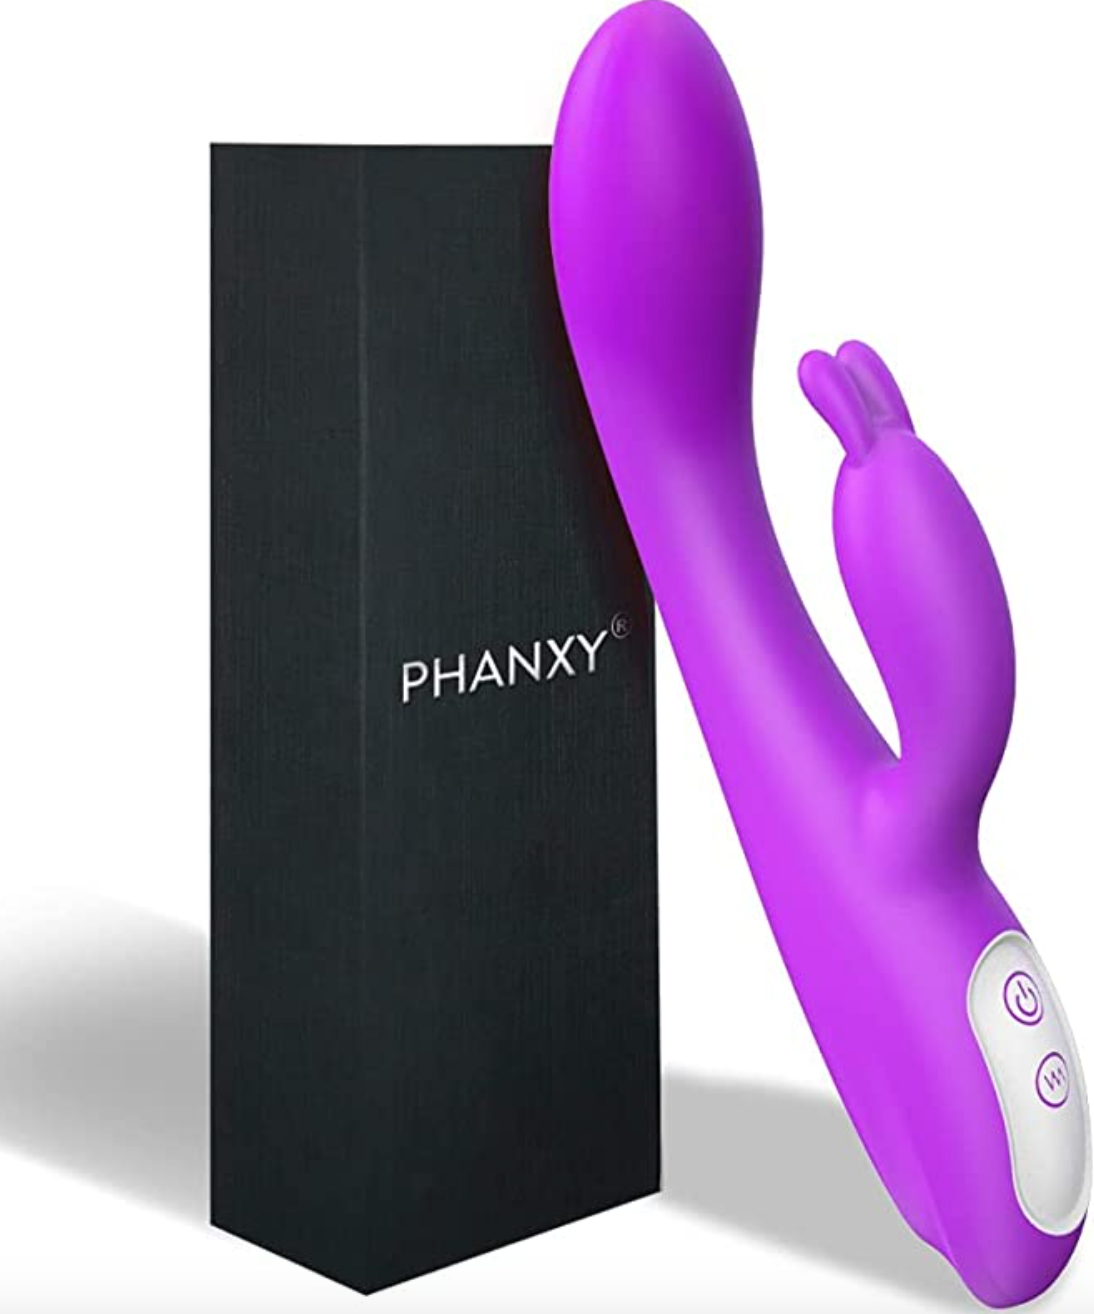 Phanxy G Spot Rabbit Vibrator With Heating Function